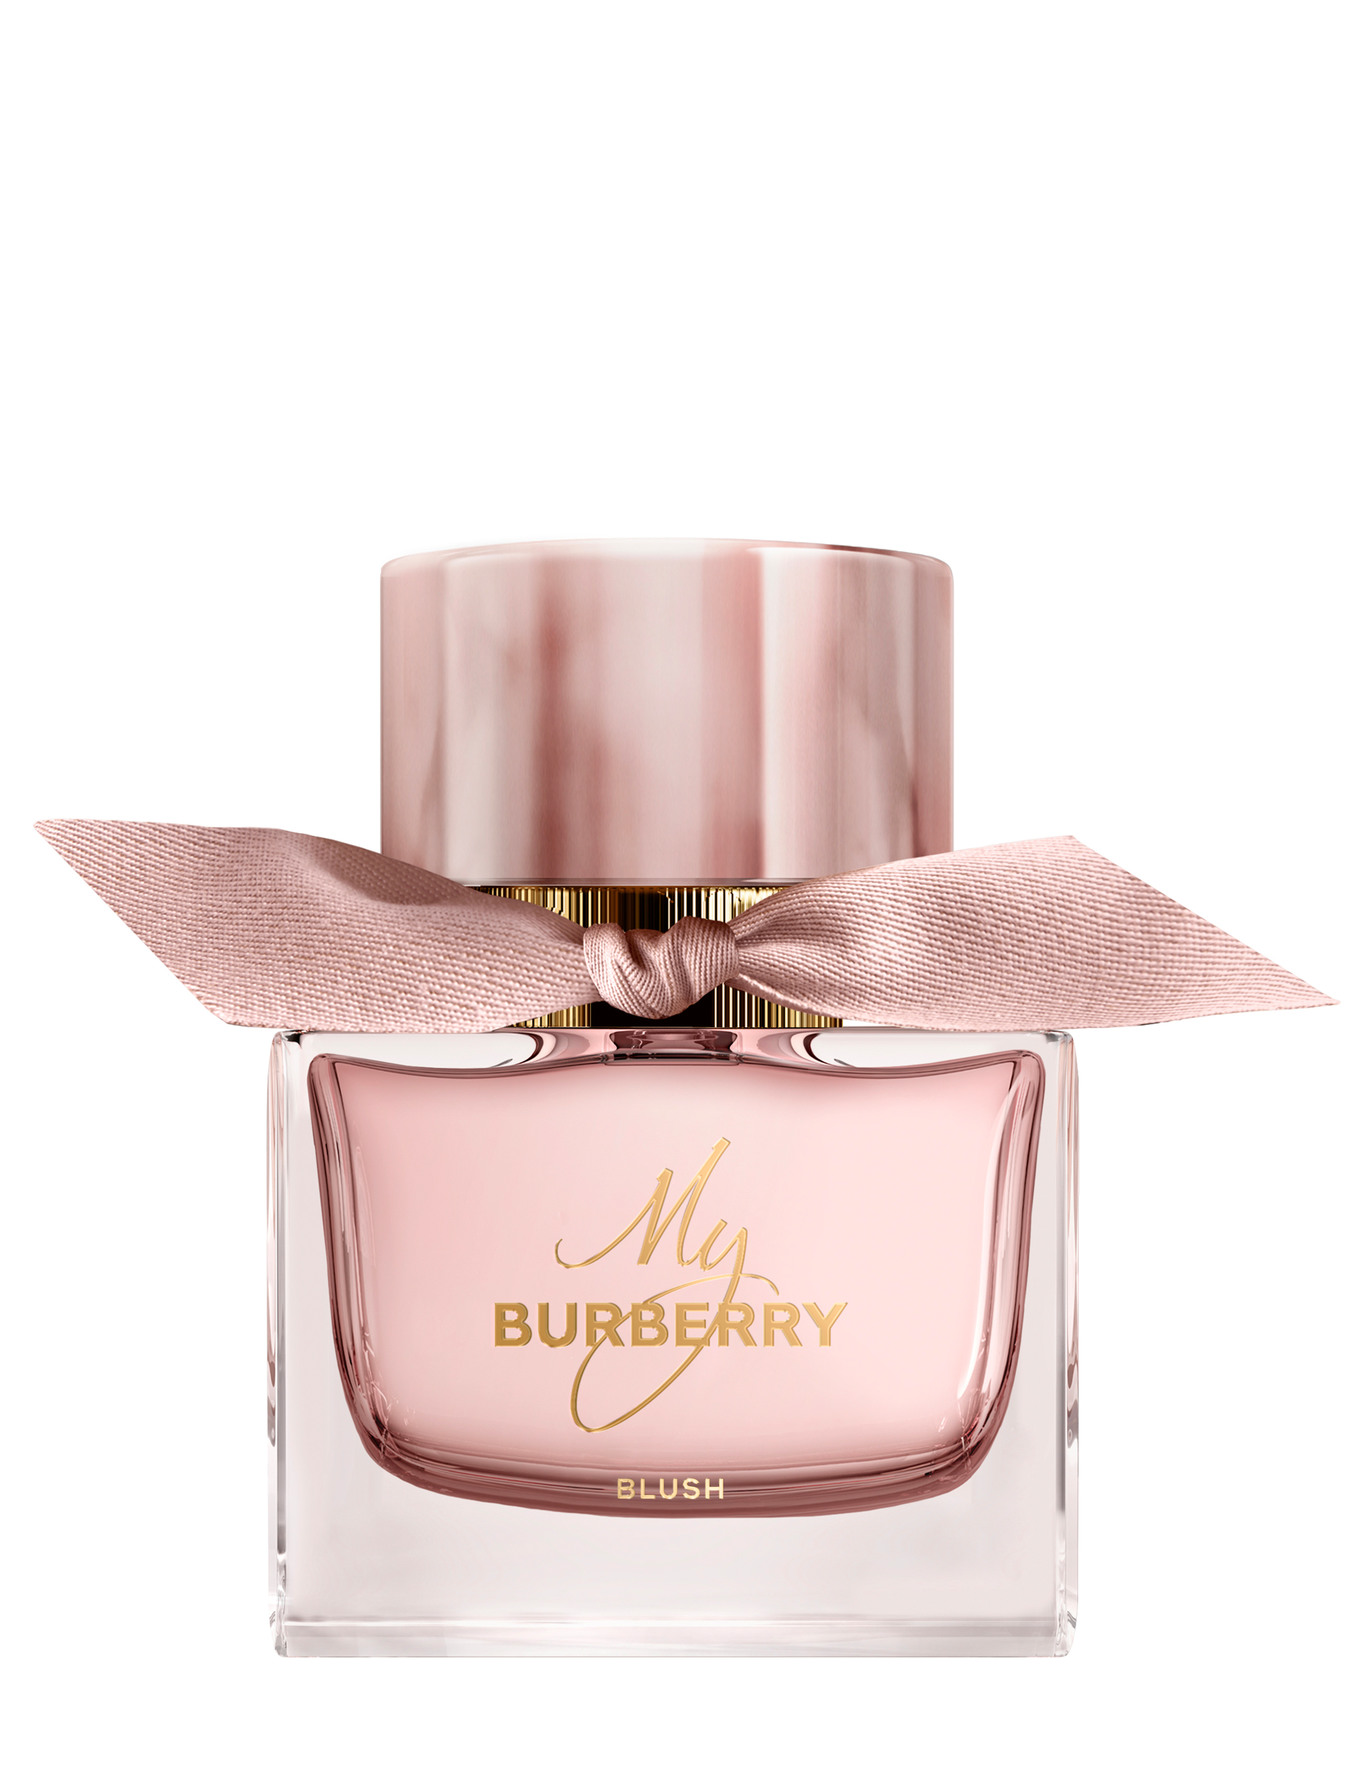 Burberry My Burberry Blush Parfum ml